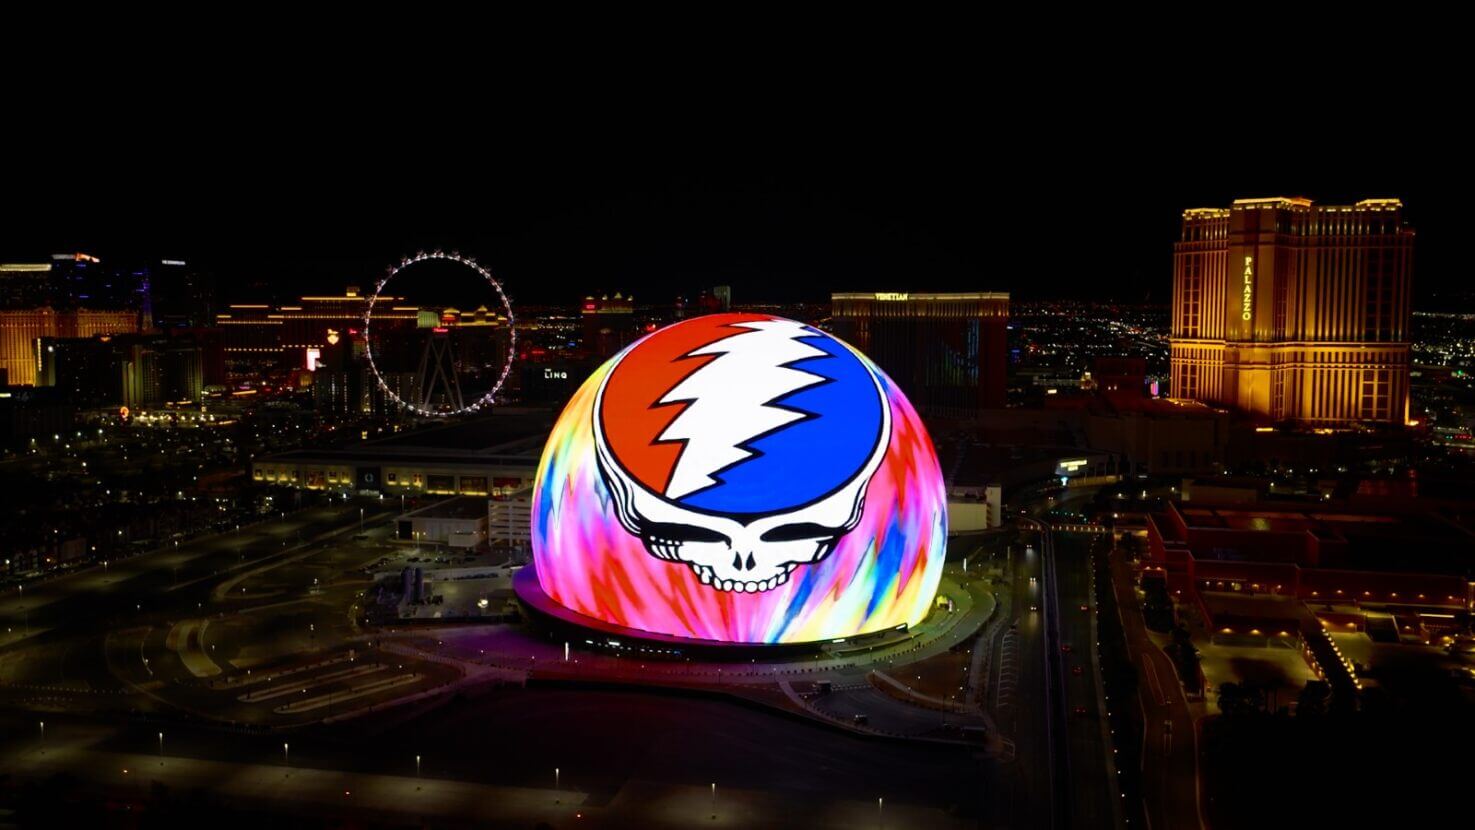 Dead & Company logo on the Las Vegas Sphere